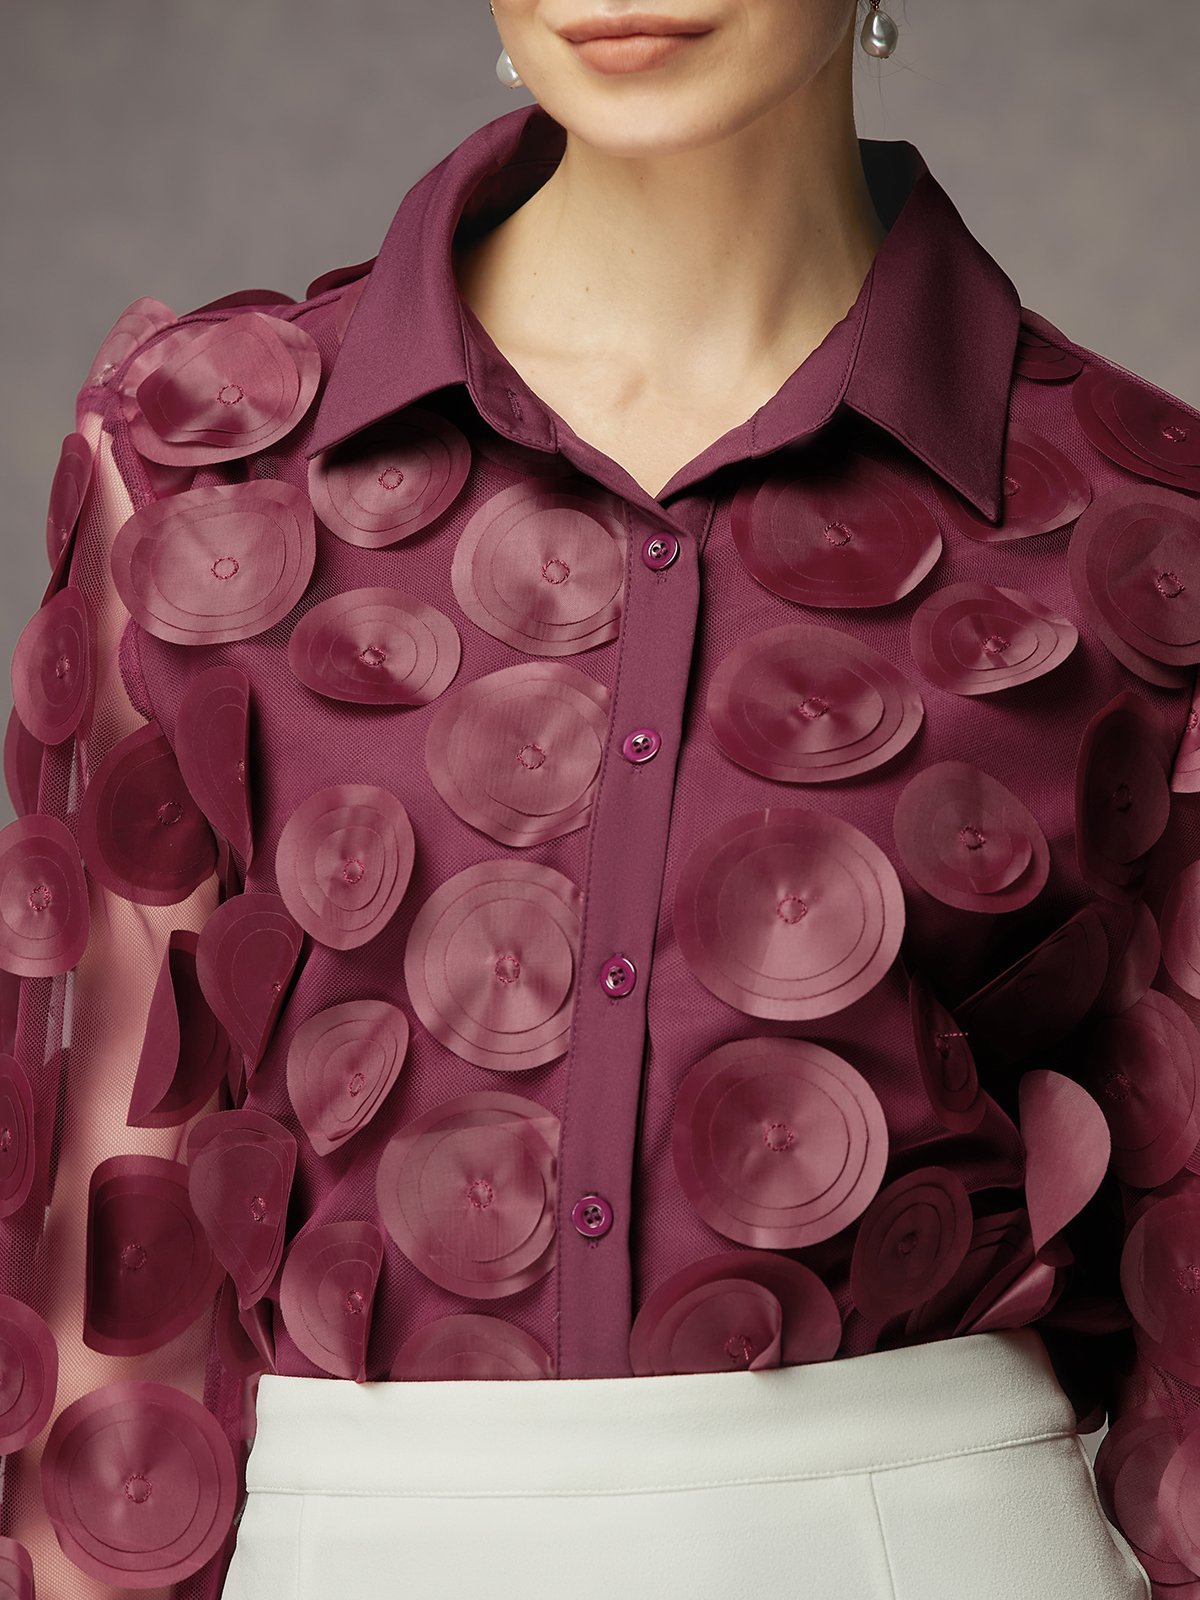 Shirt Collar Urban Plain 3D Floral  Regular Fit Blouse